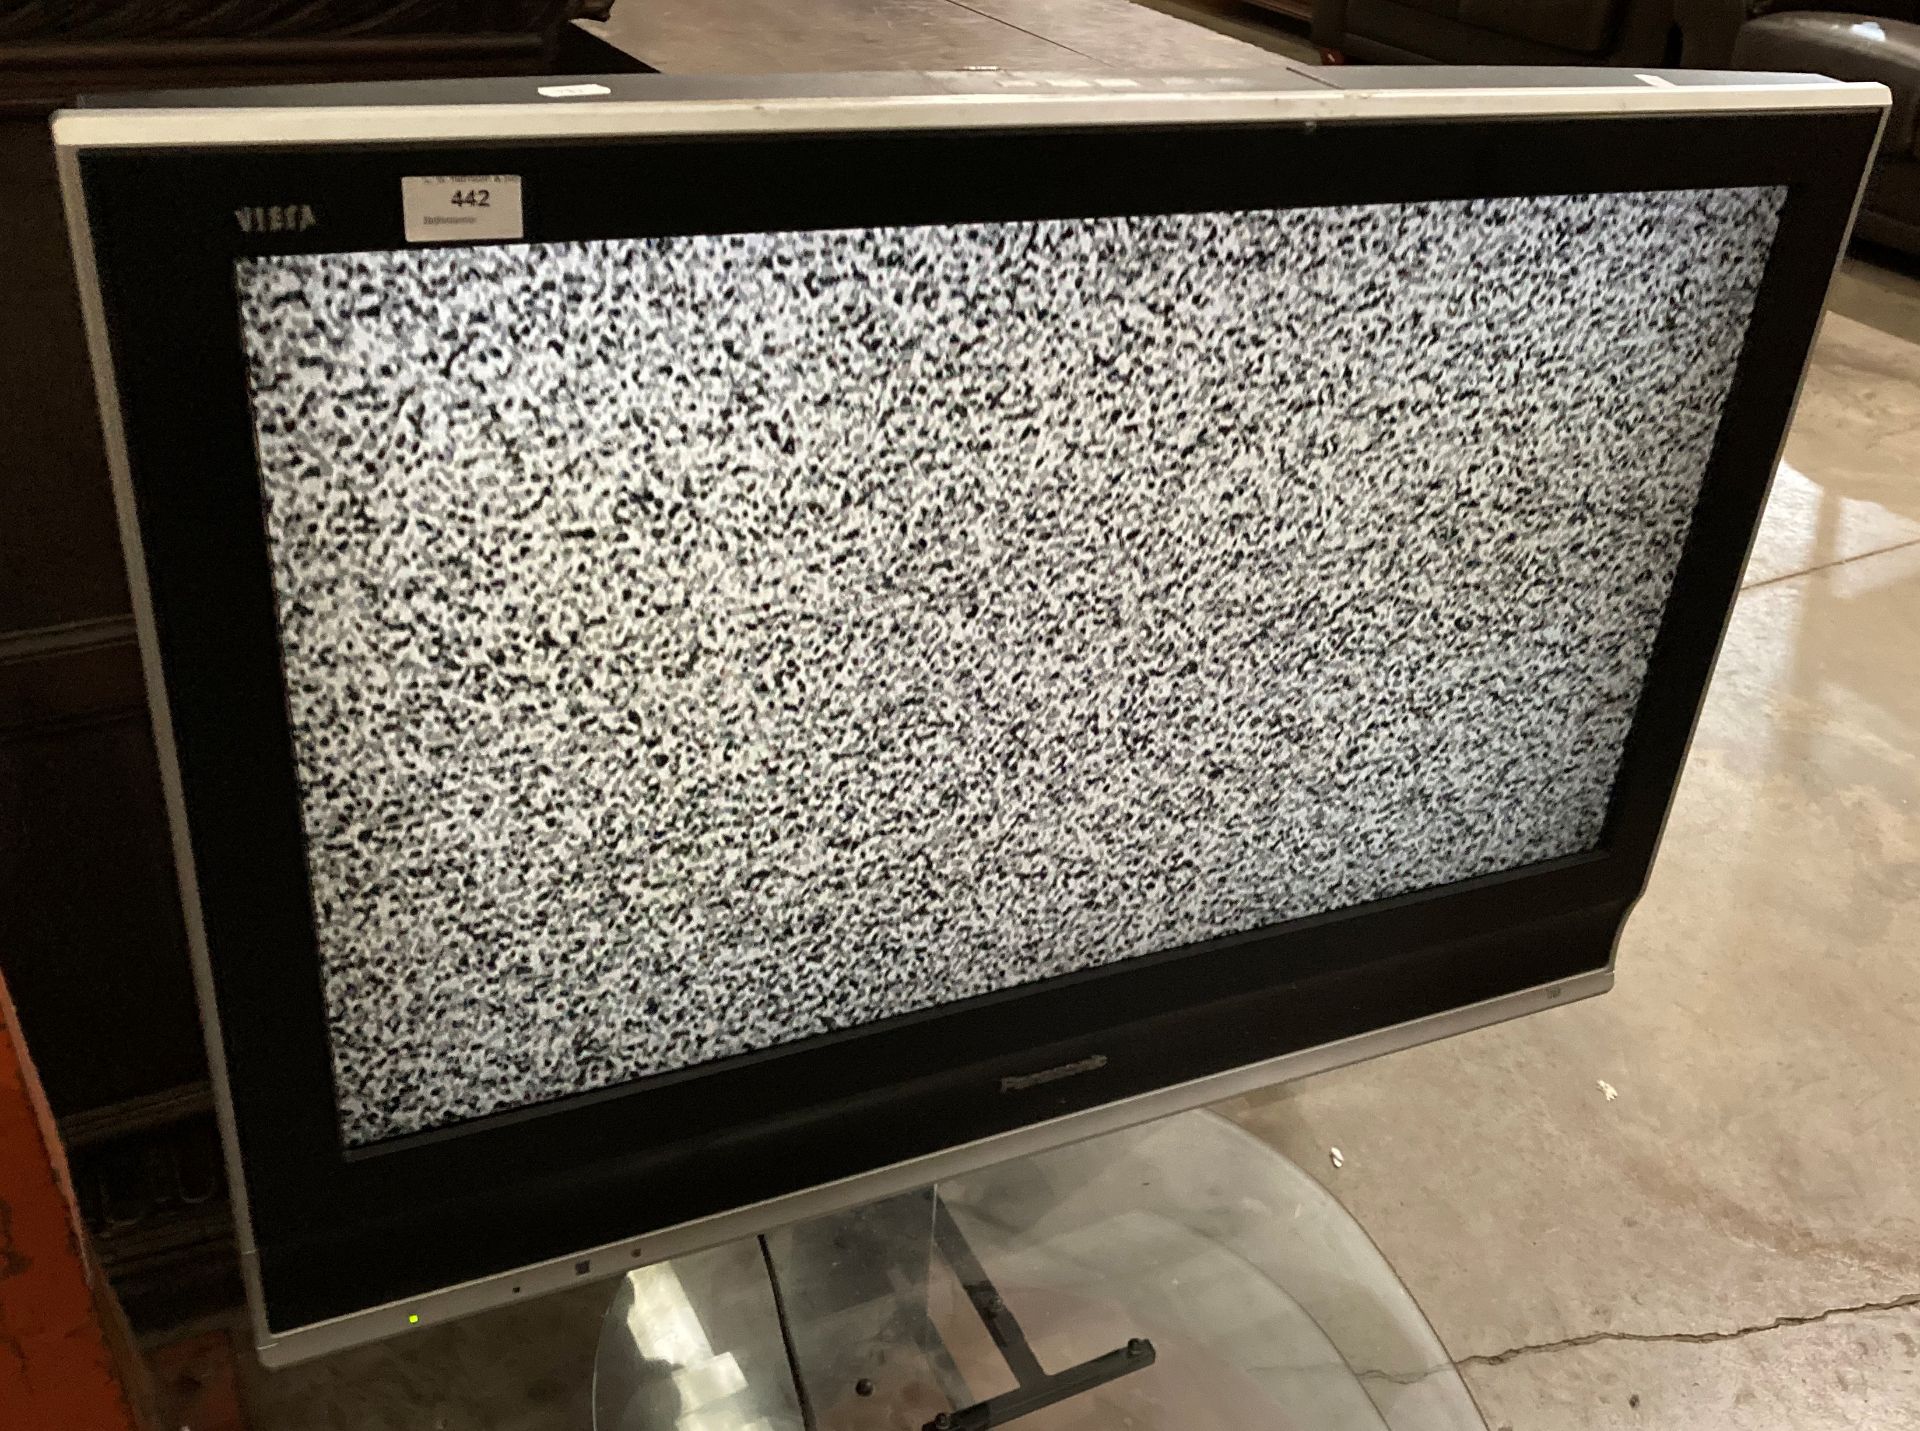 Panasonic Viera 32" LCD TV on stand (no remote) (saleroom location: PO)